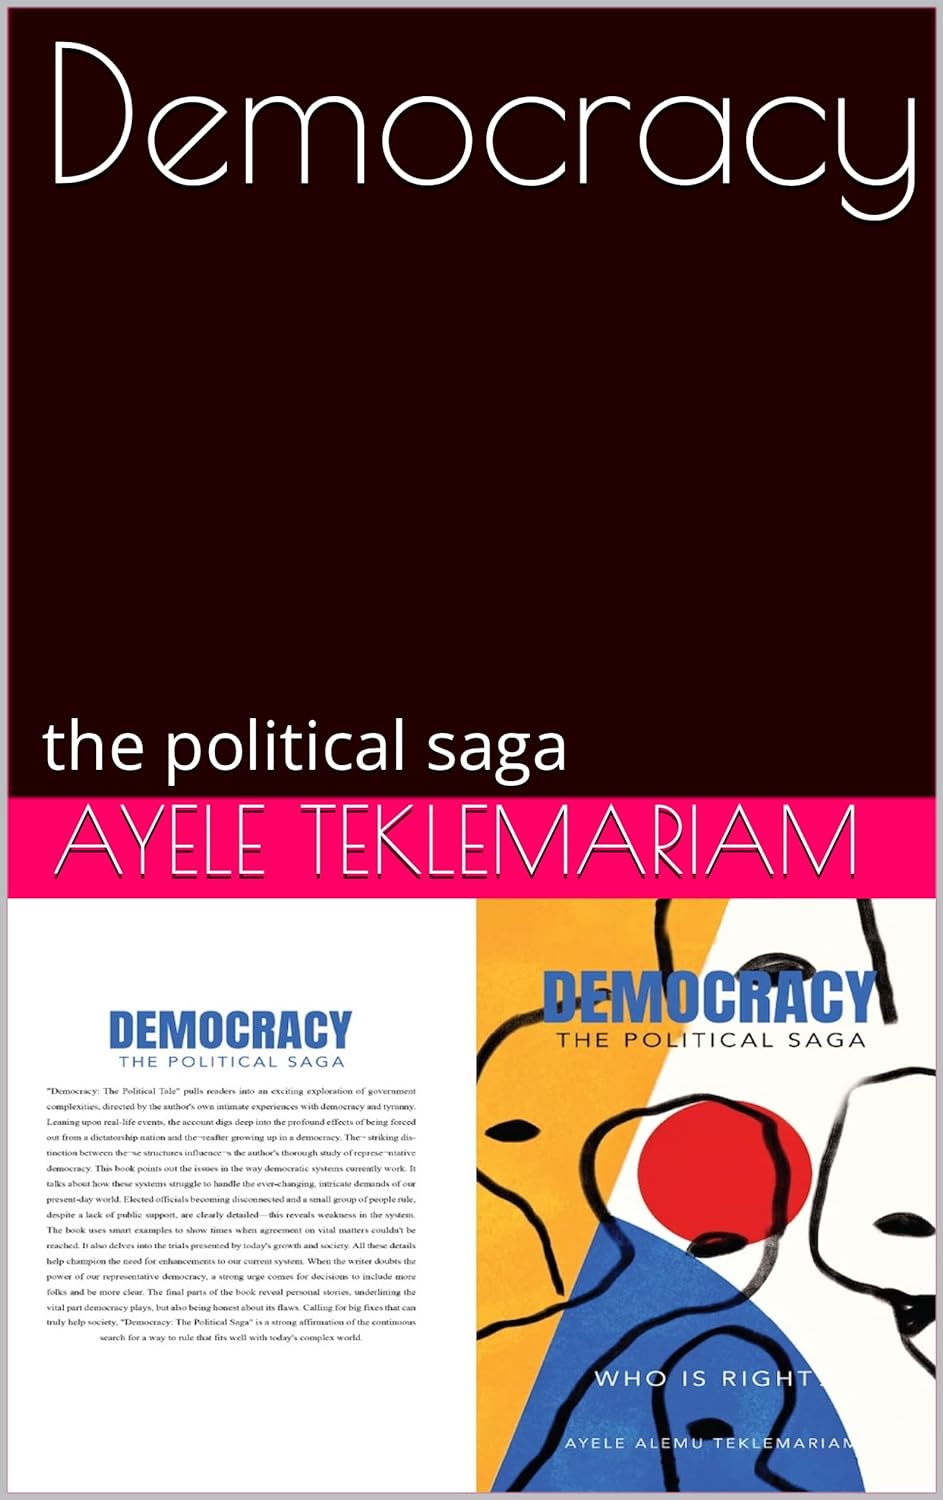 Blockchain Technology and Democracy Converge in Ayele Teklemariam's New Book: "Democracy - The Political Saga!"